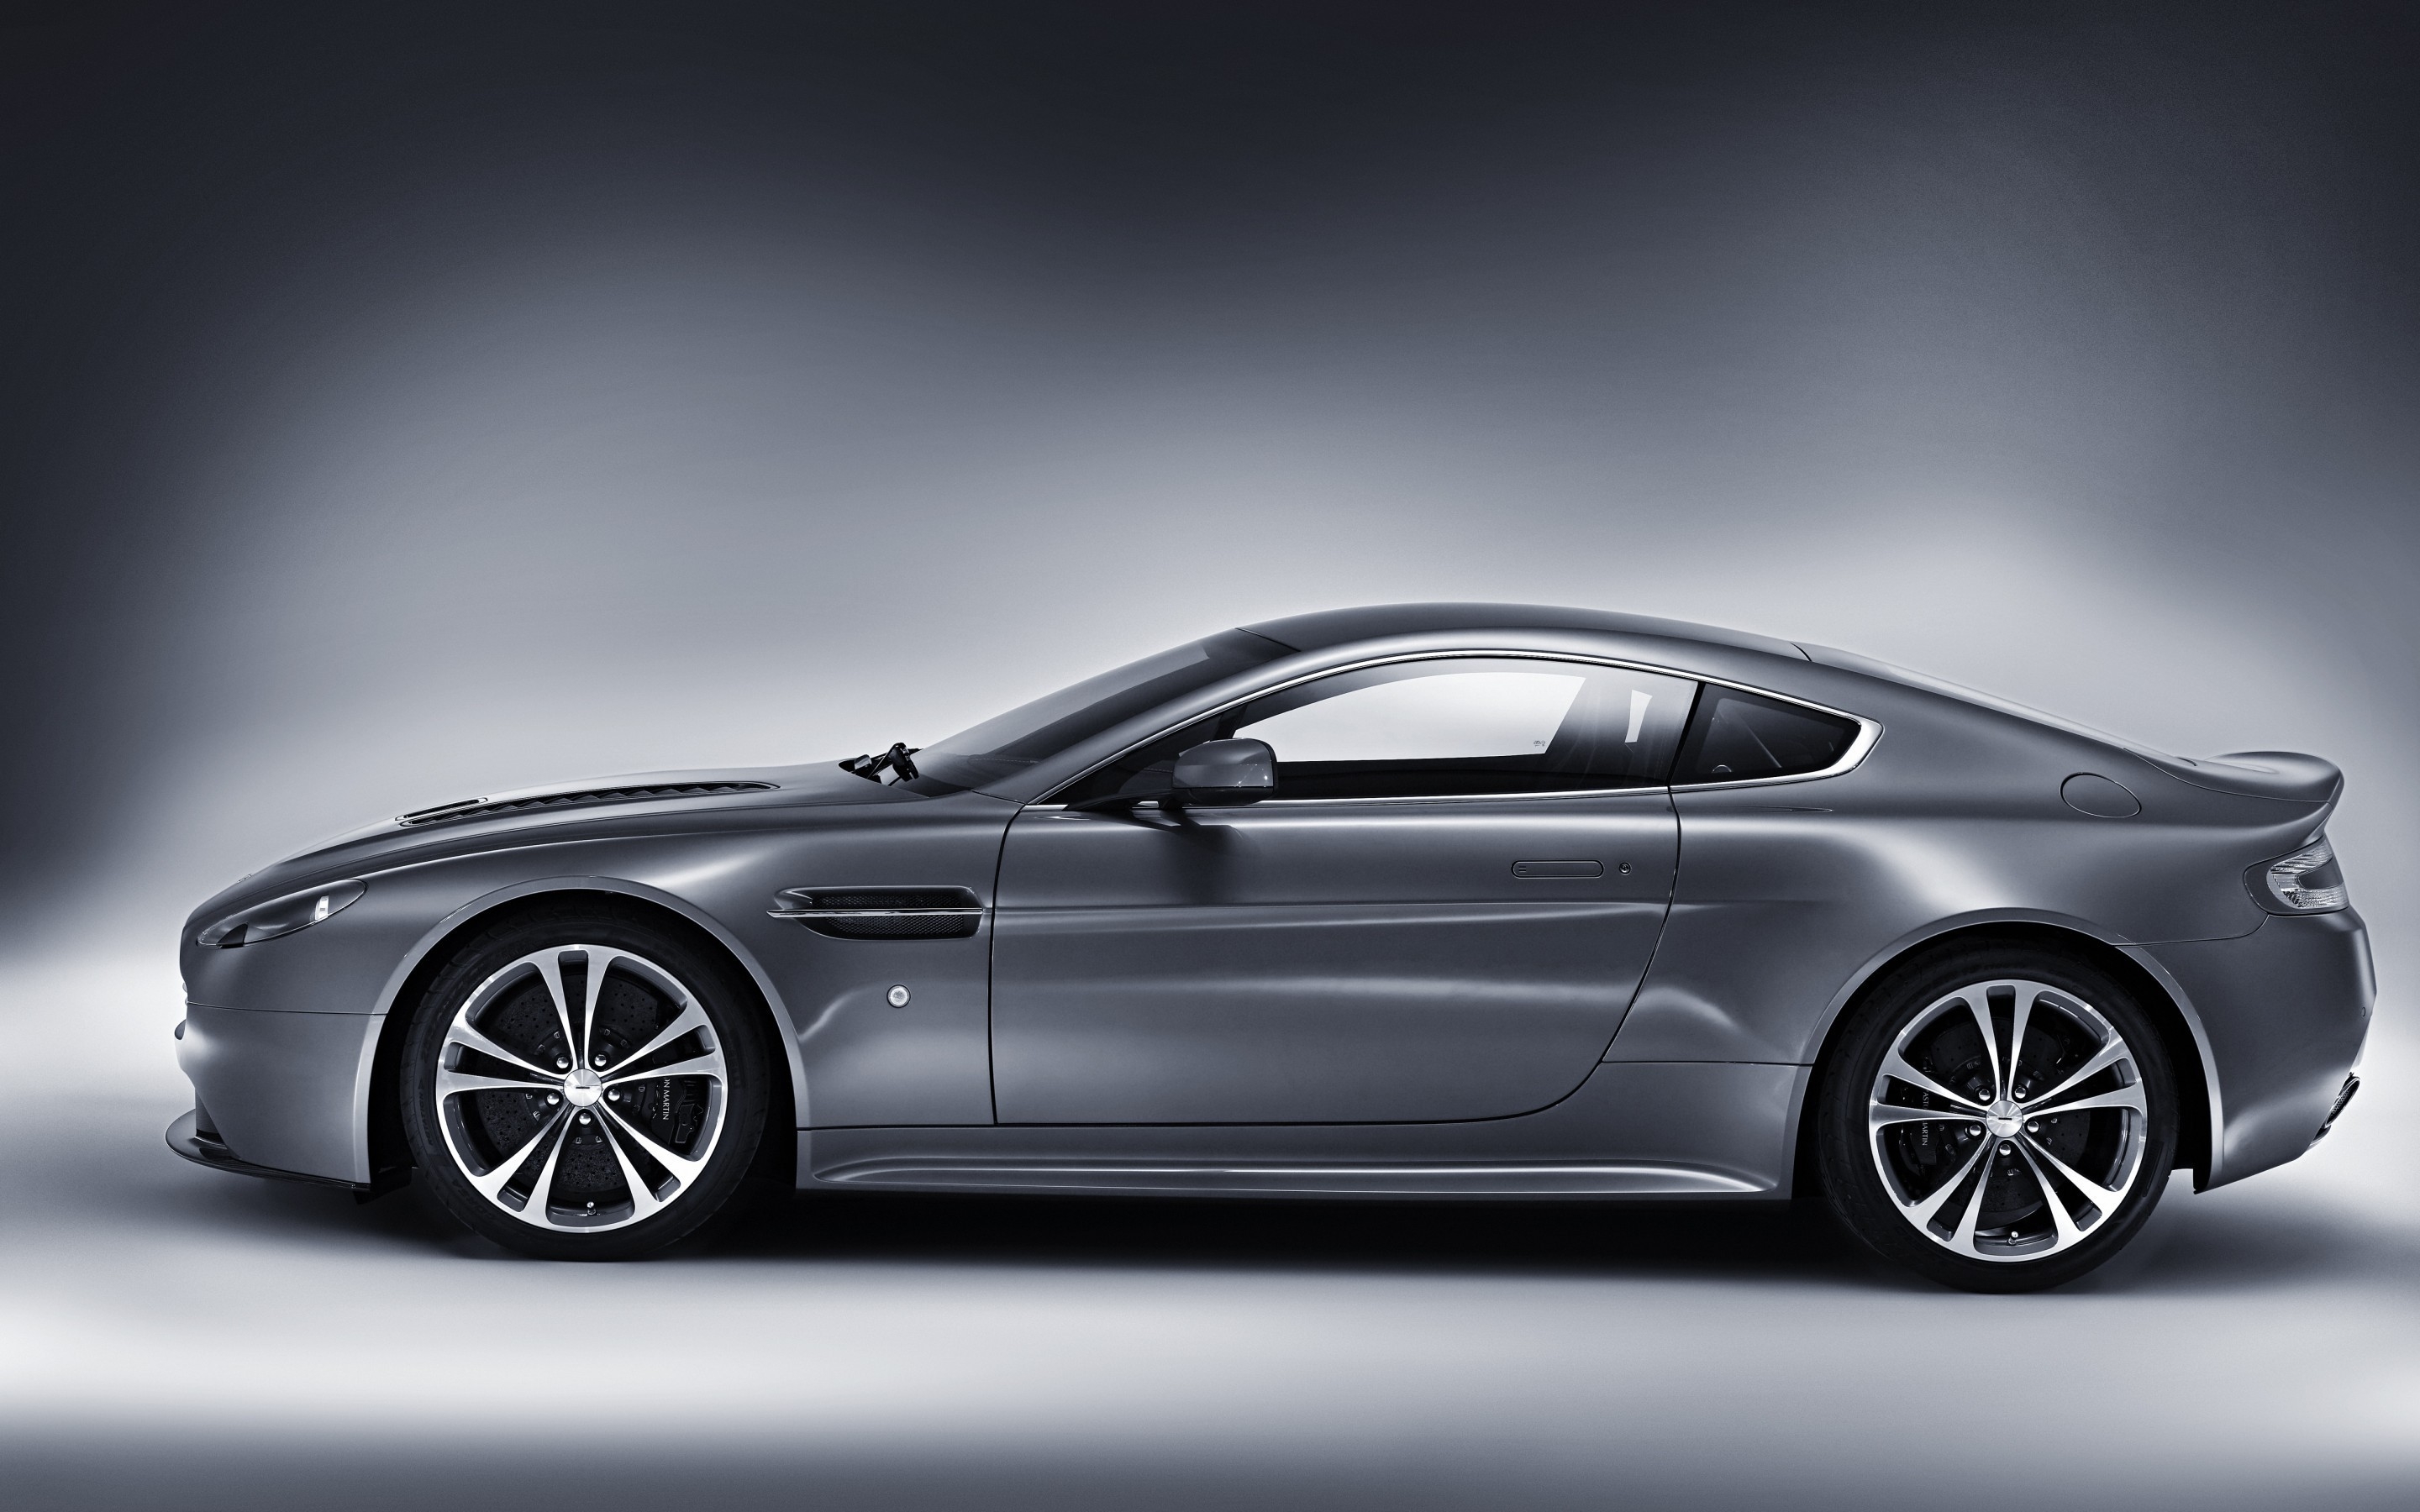 Aston Martin V12 Vantage Front View for 2880 x 1800 Retina Display resolution